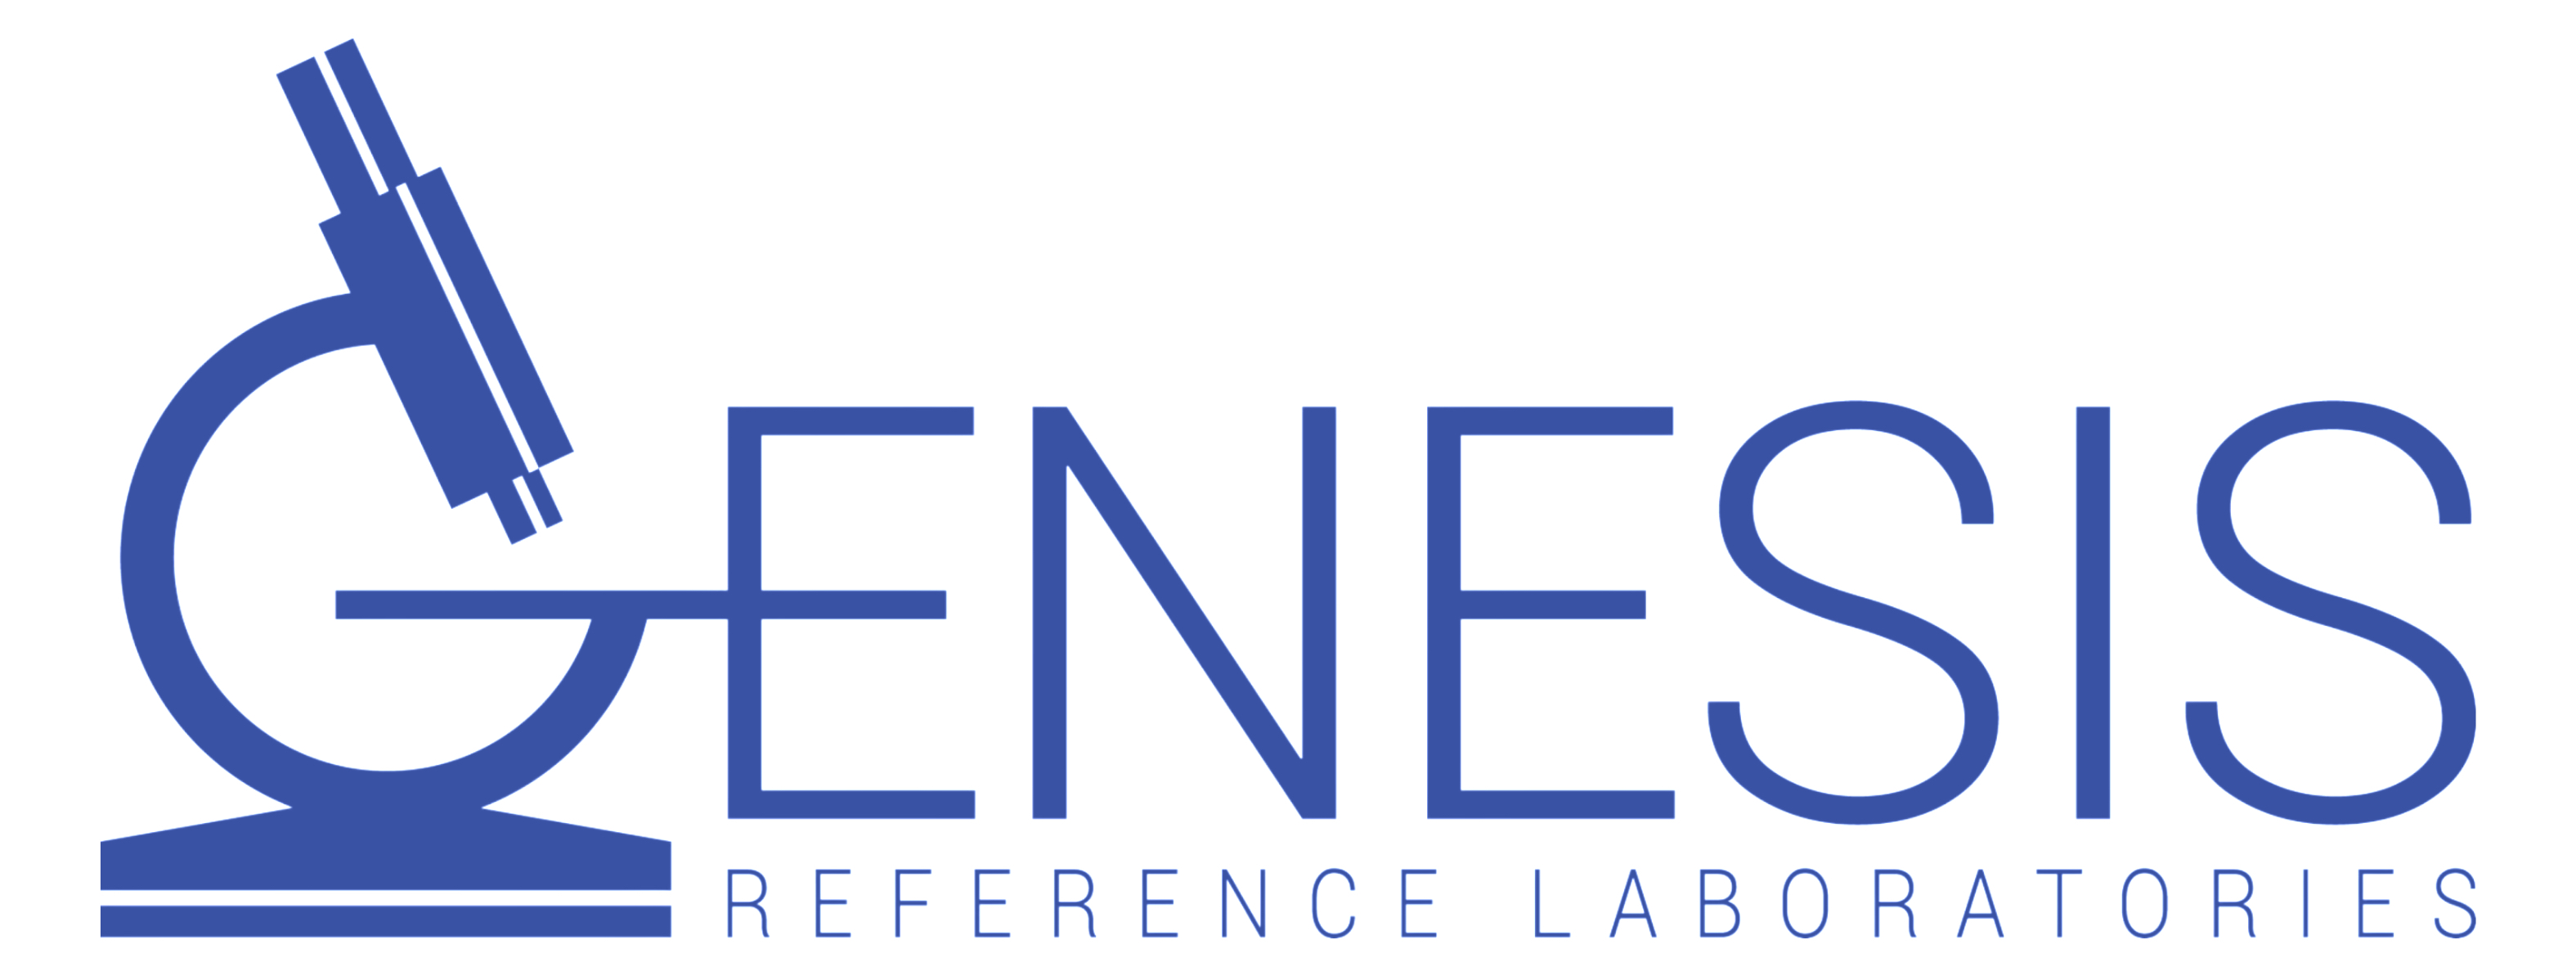 Genesis Reference Laboratories